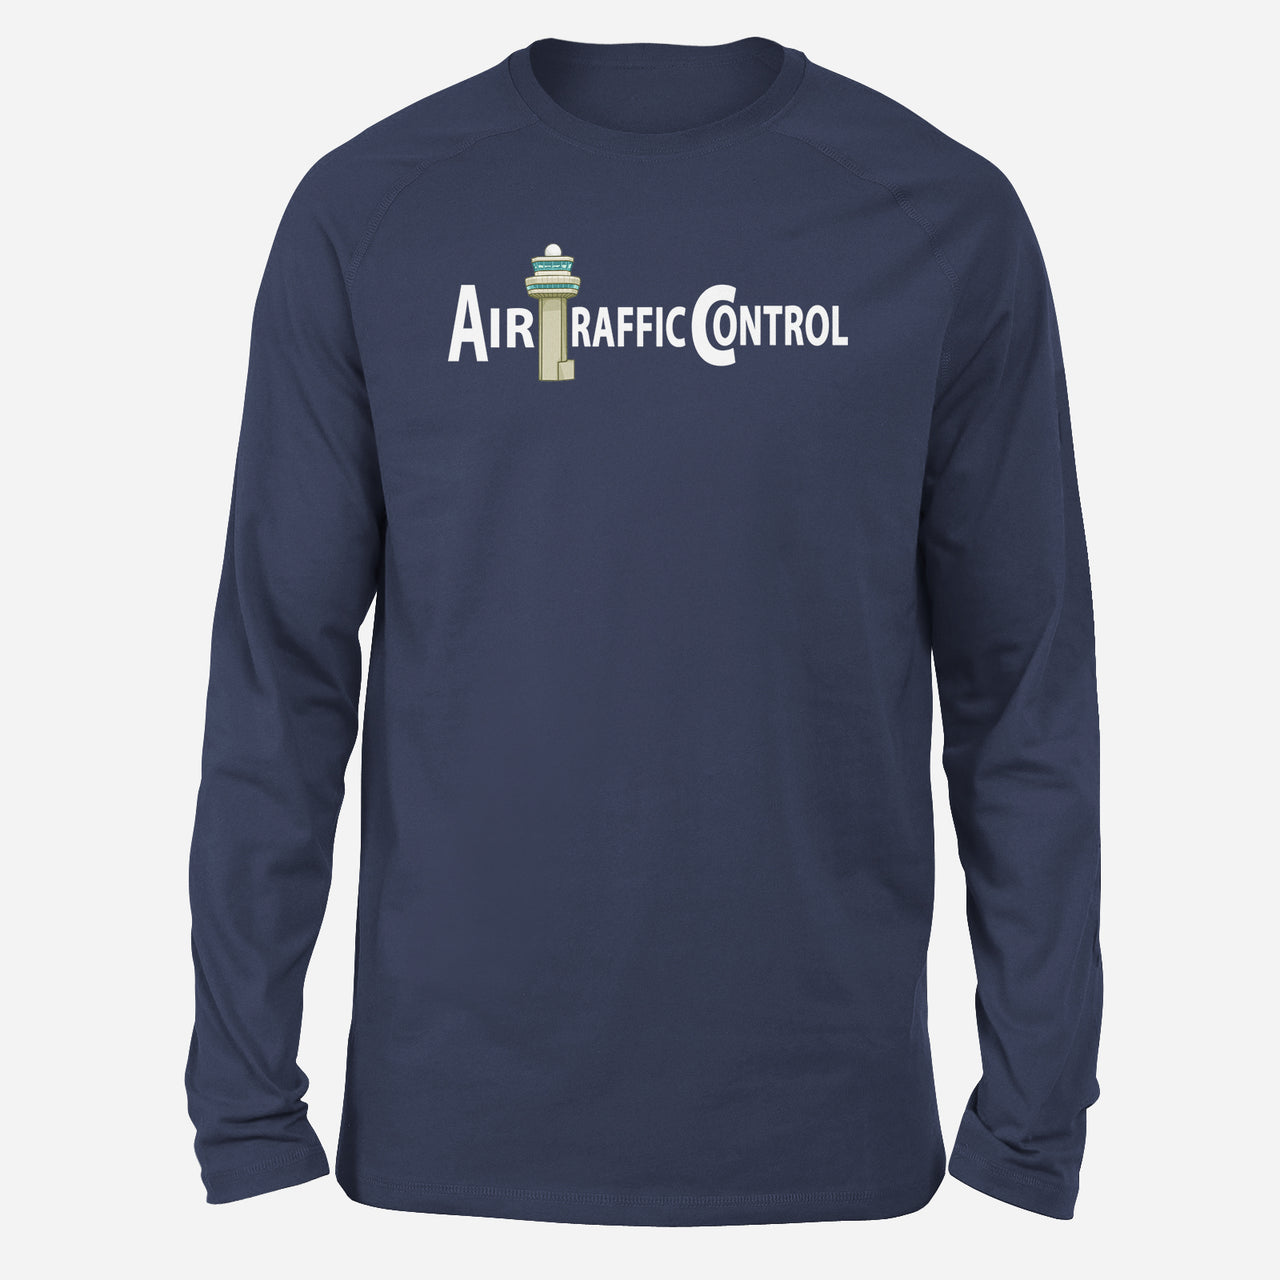 Air Traffic Control Designed Long-Sleeve T-Shirts